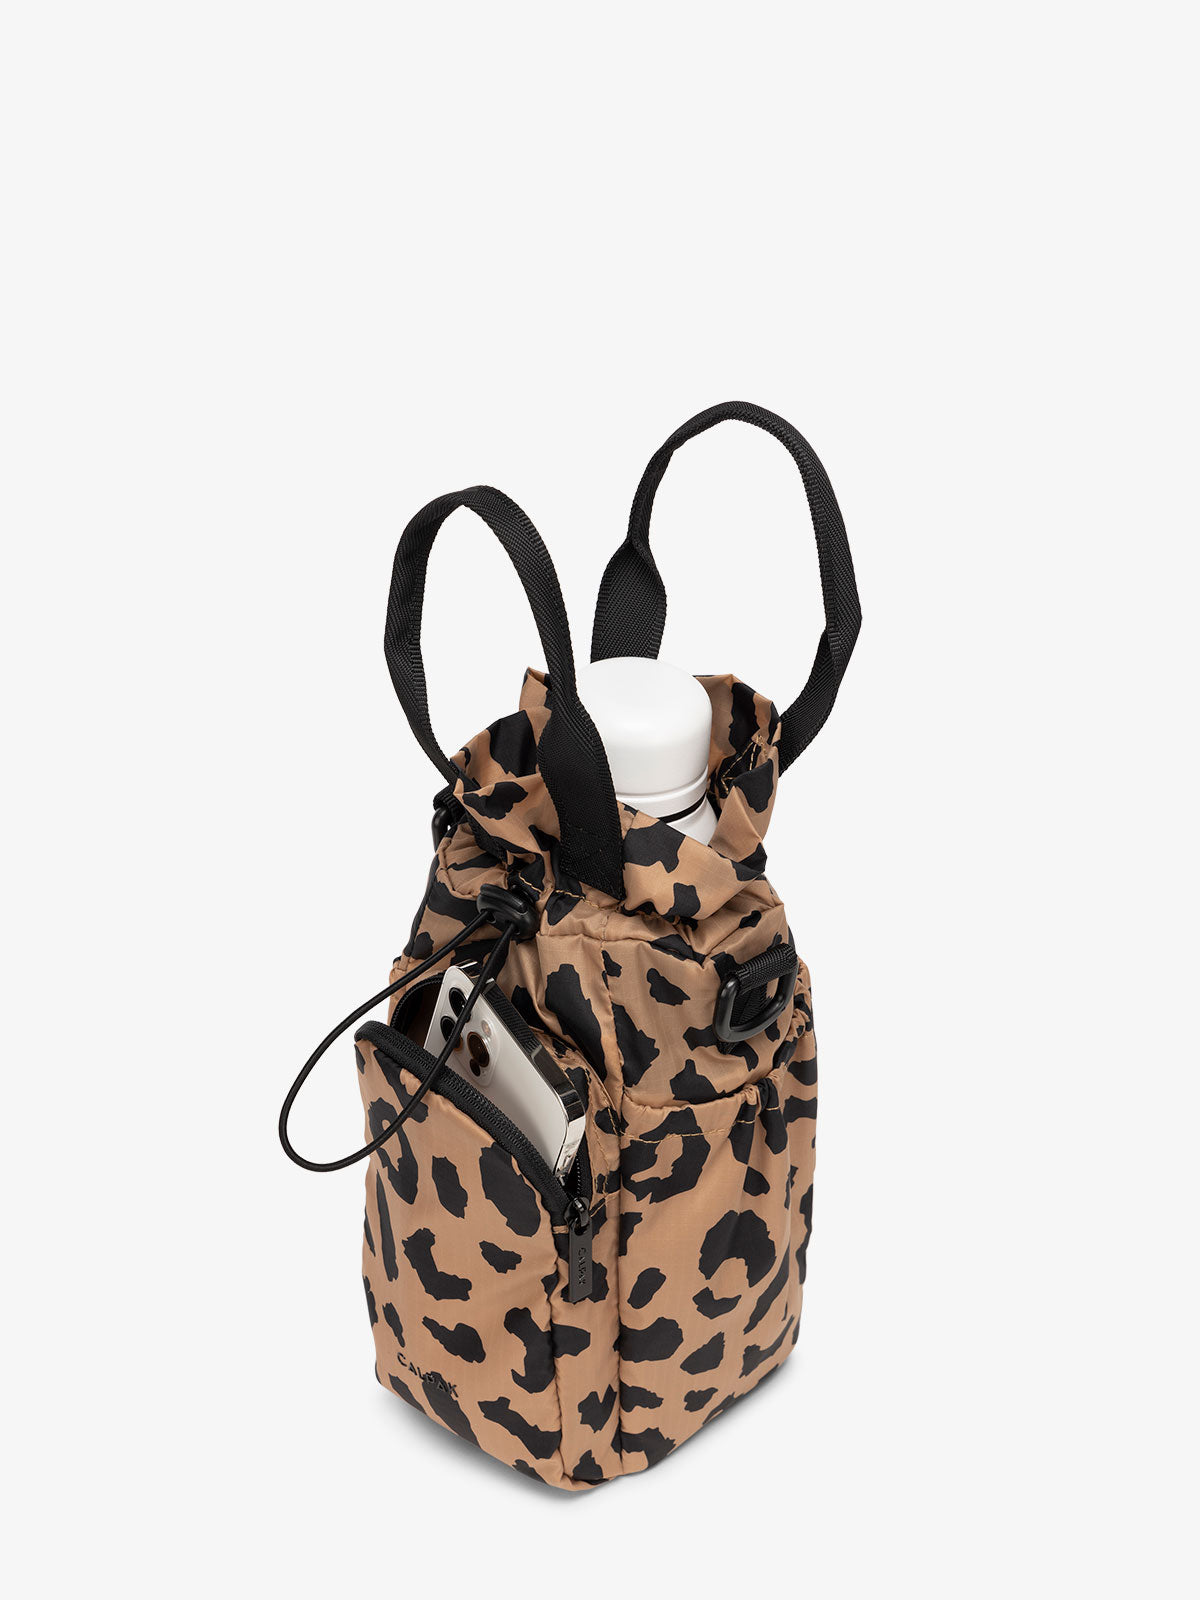 water bottle holder purse in cheetah